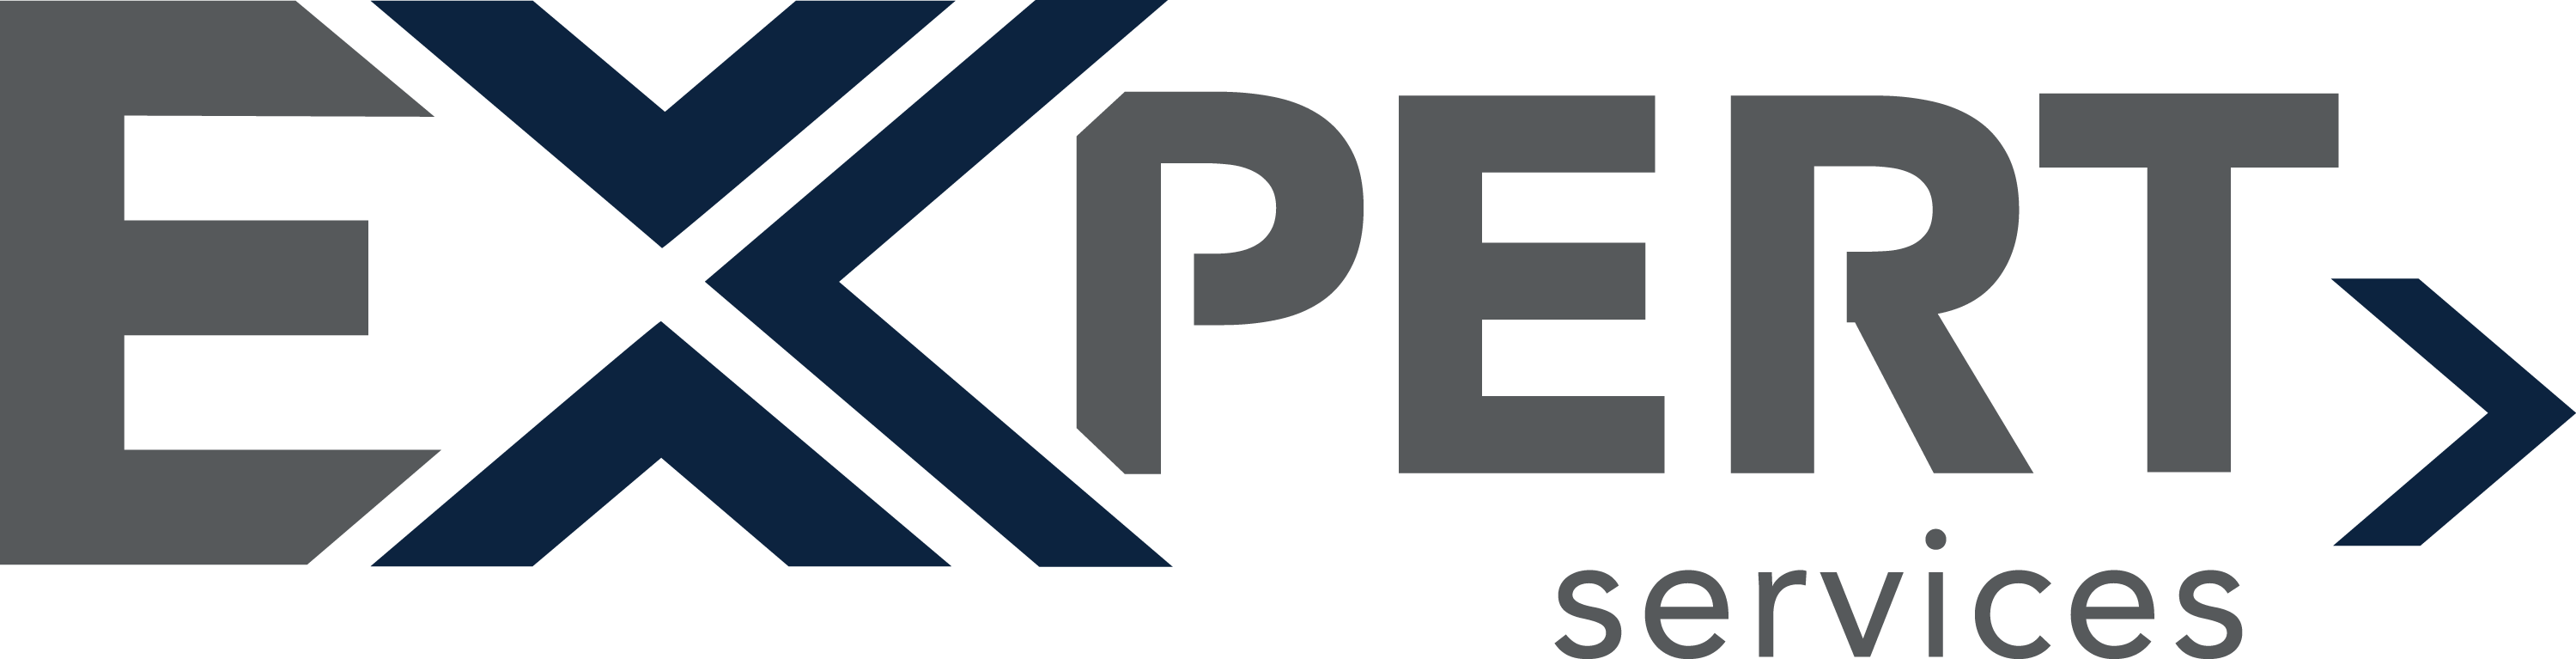 EXpert-Services-Logo-Large